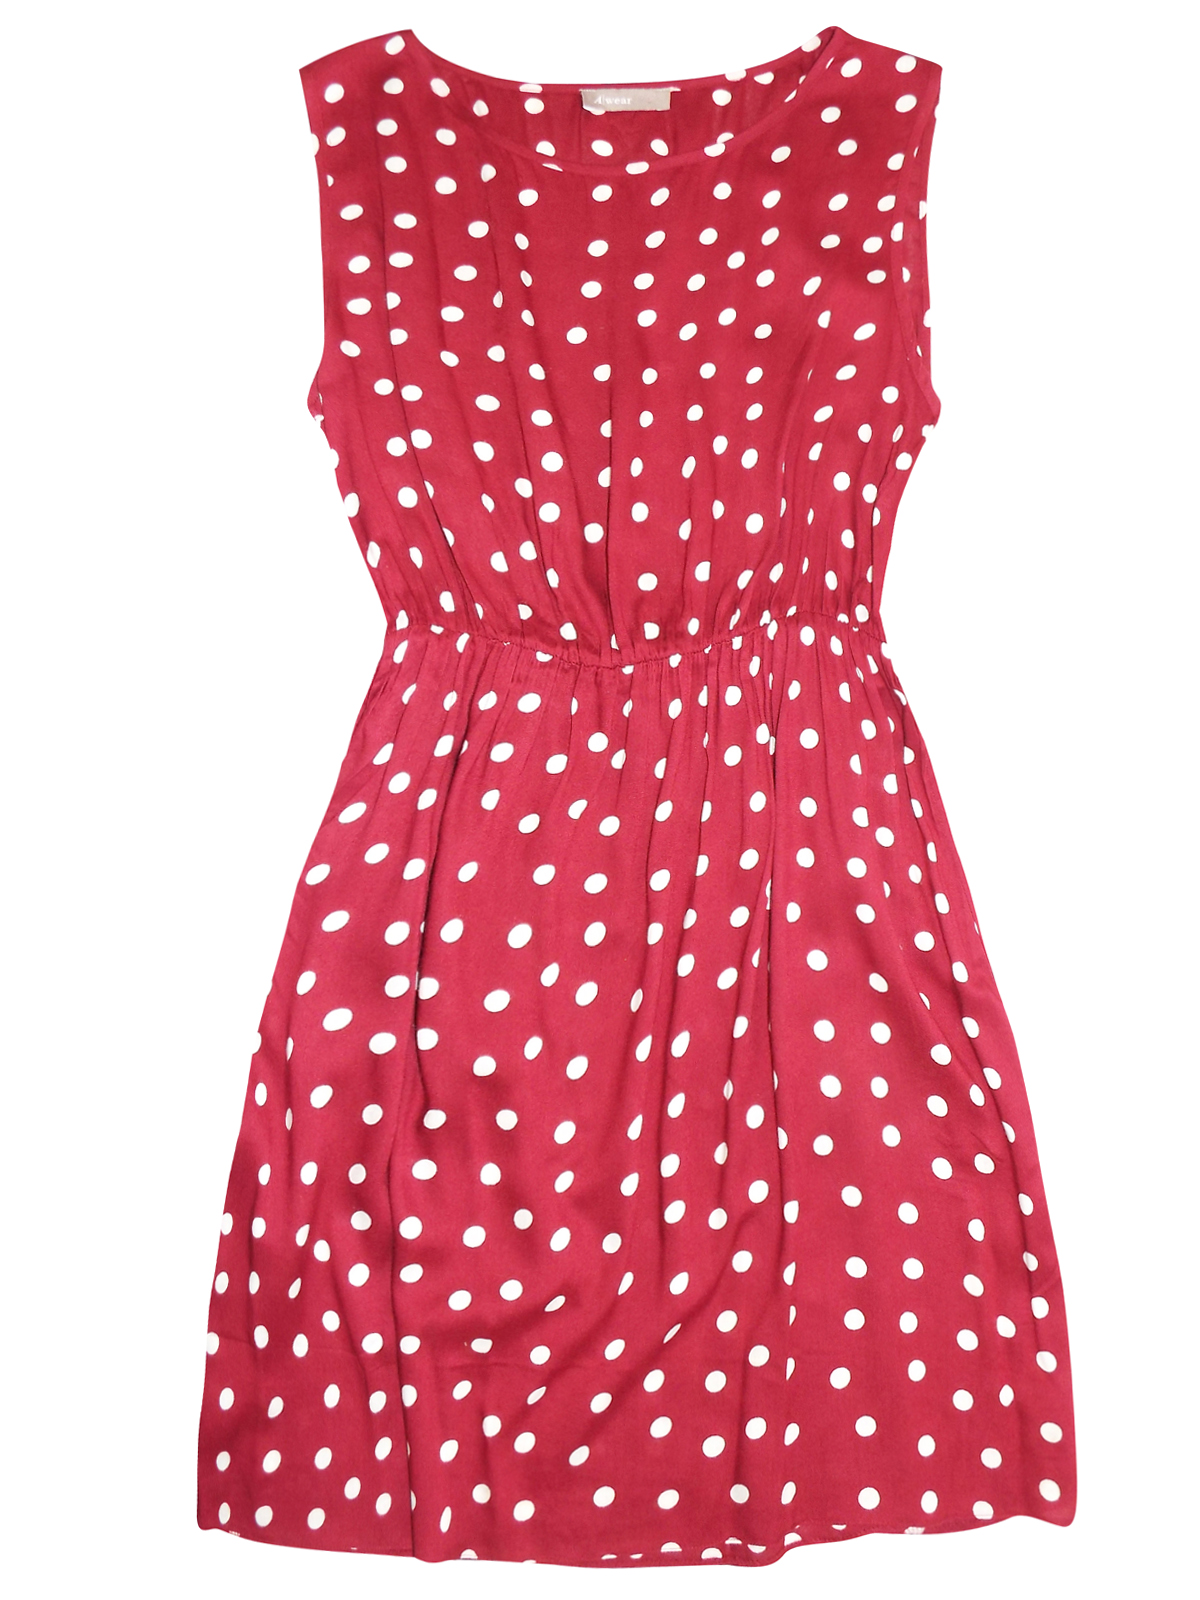 A Wear - - A Wear BURGUNDY Sleeveless Polka Dot Dress - Size Large to ...